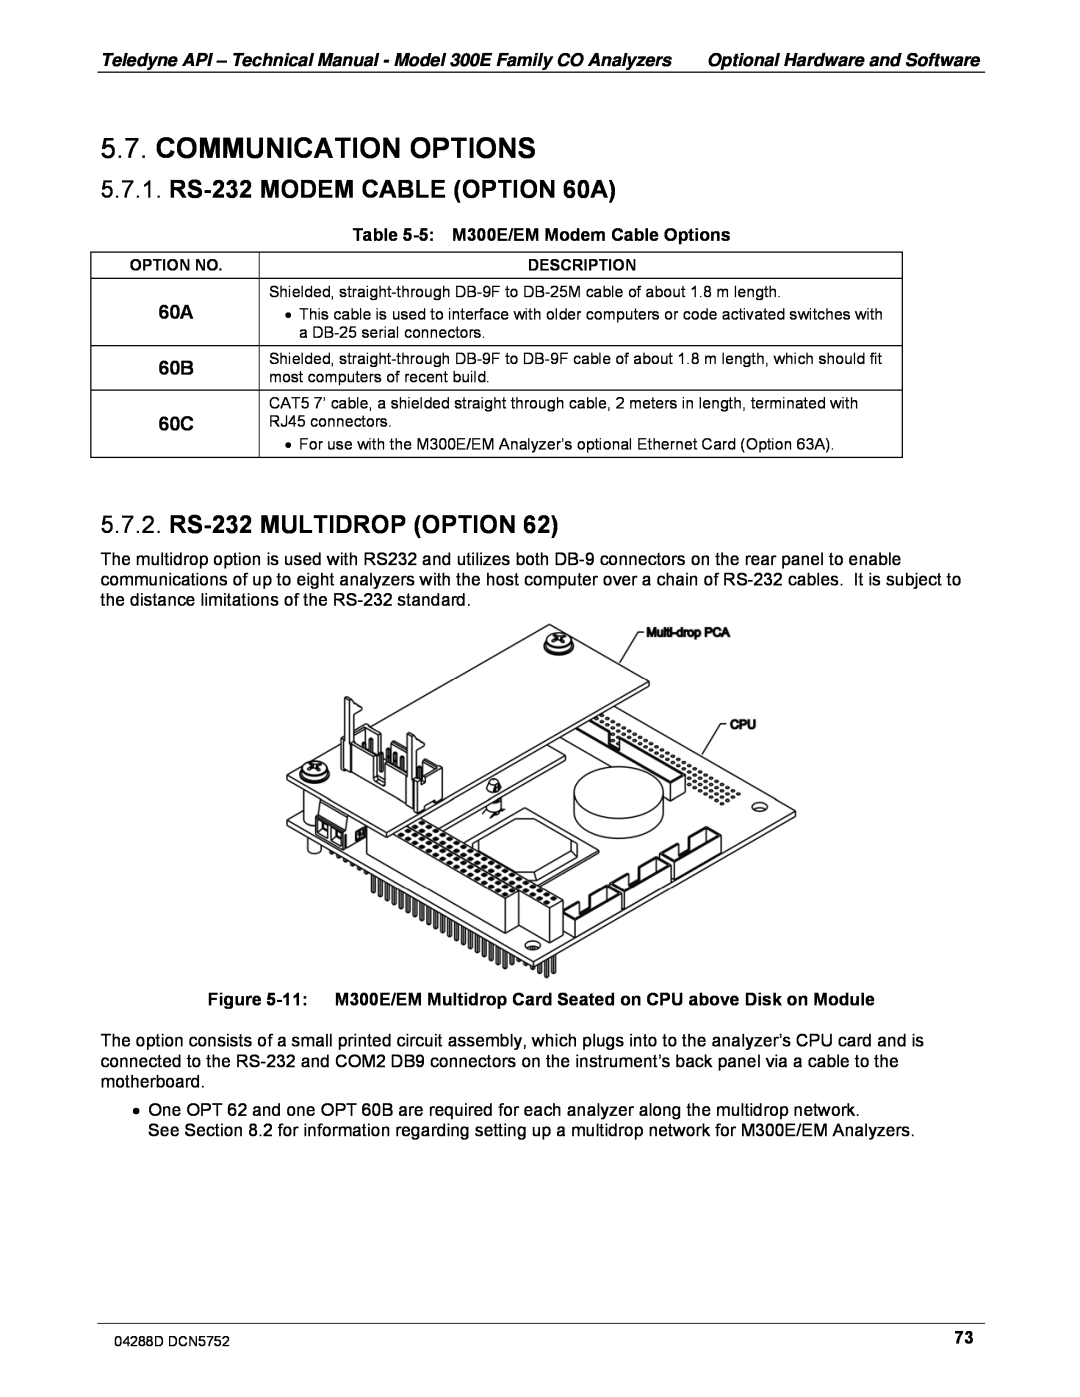 Teledyne M300EM operation manual Communication Options, 5.7.1.RS-232MODEM CABLE OPTION 60A, 5.7.2.RS-232MULTIDROP OPTION 